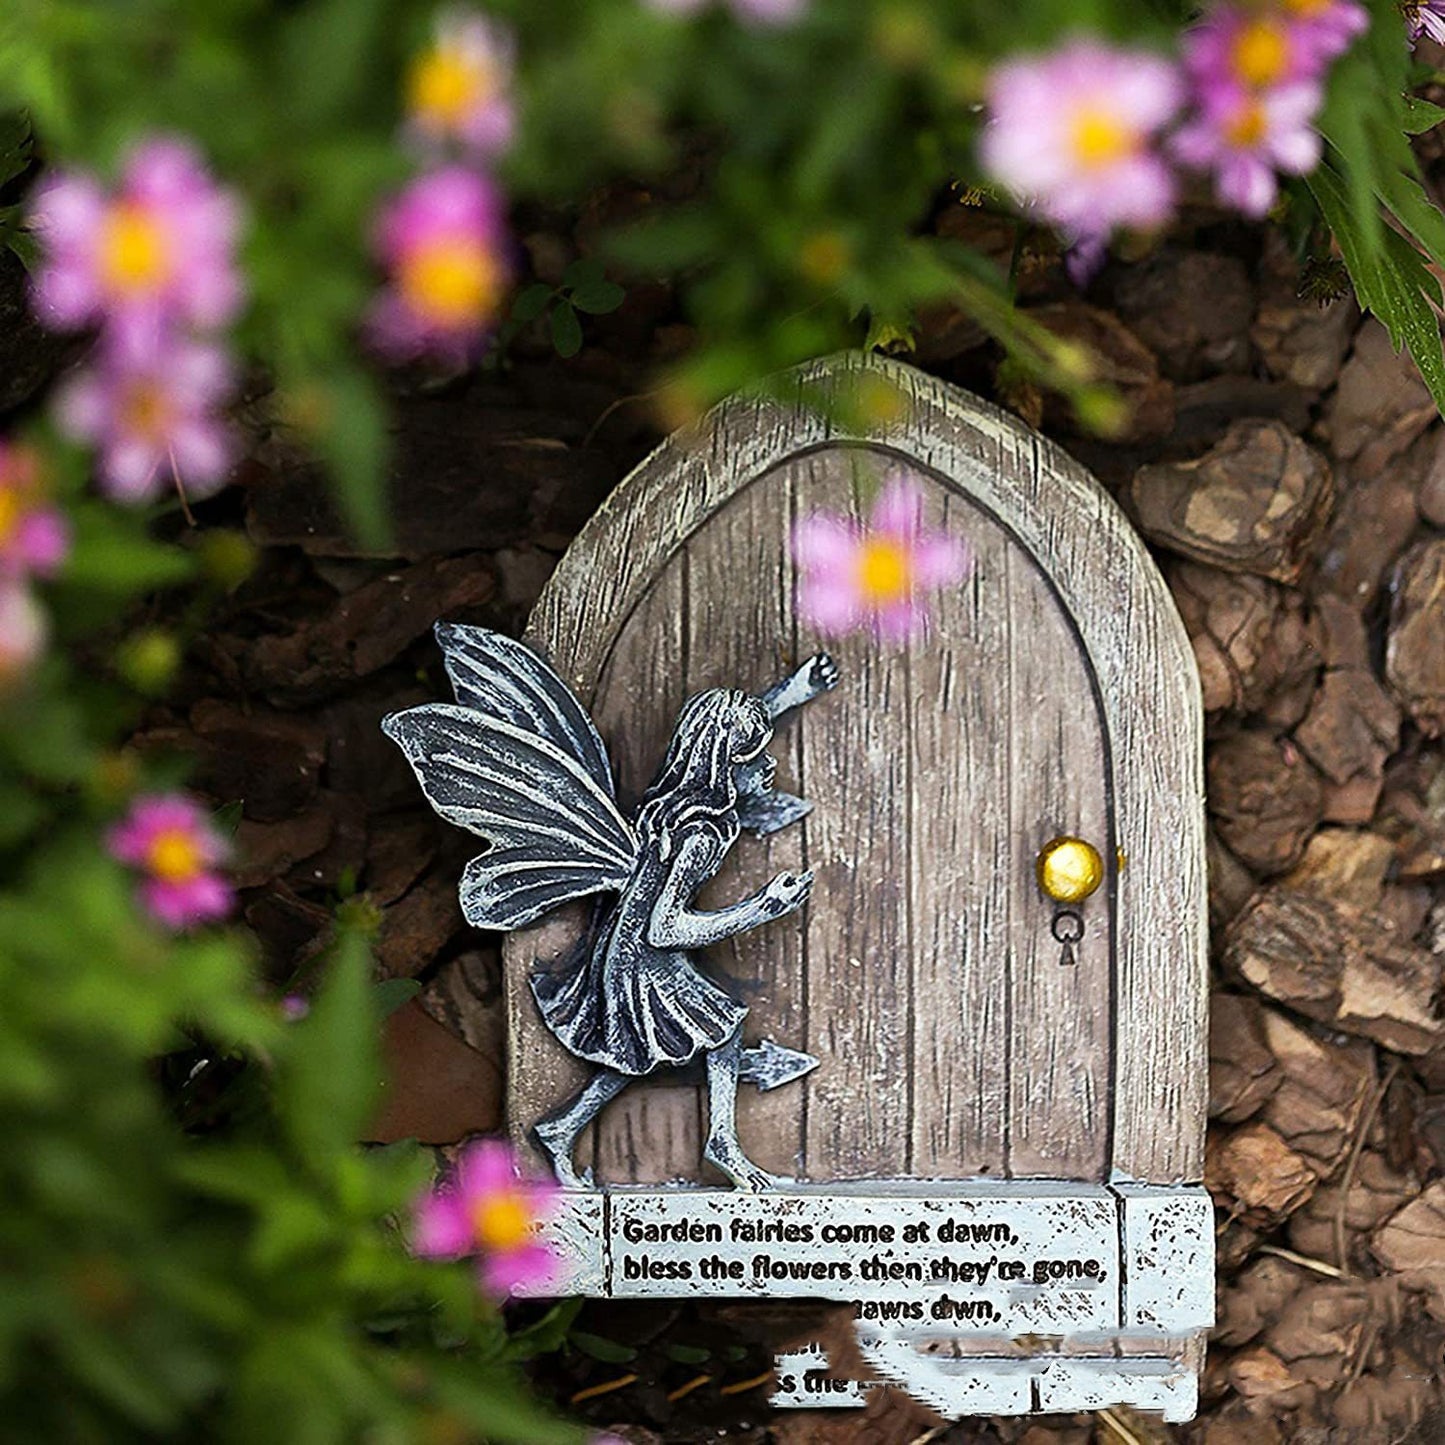 Fairy Tale Mini Resin Tree Decoration Garden Wall Hanging Small Ornament